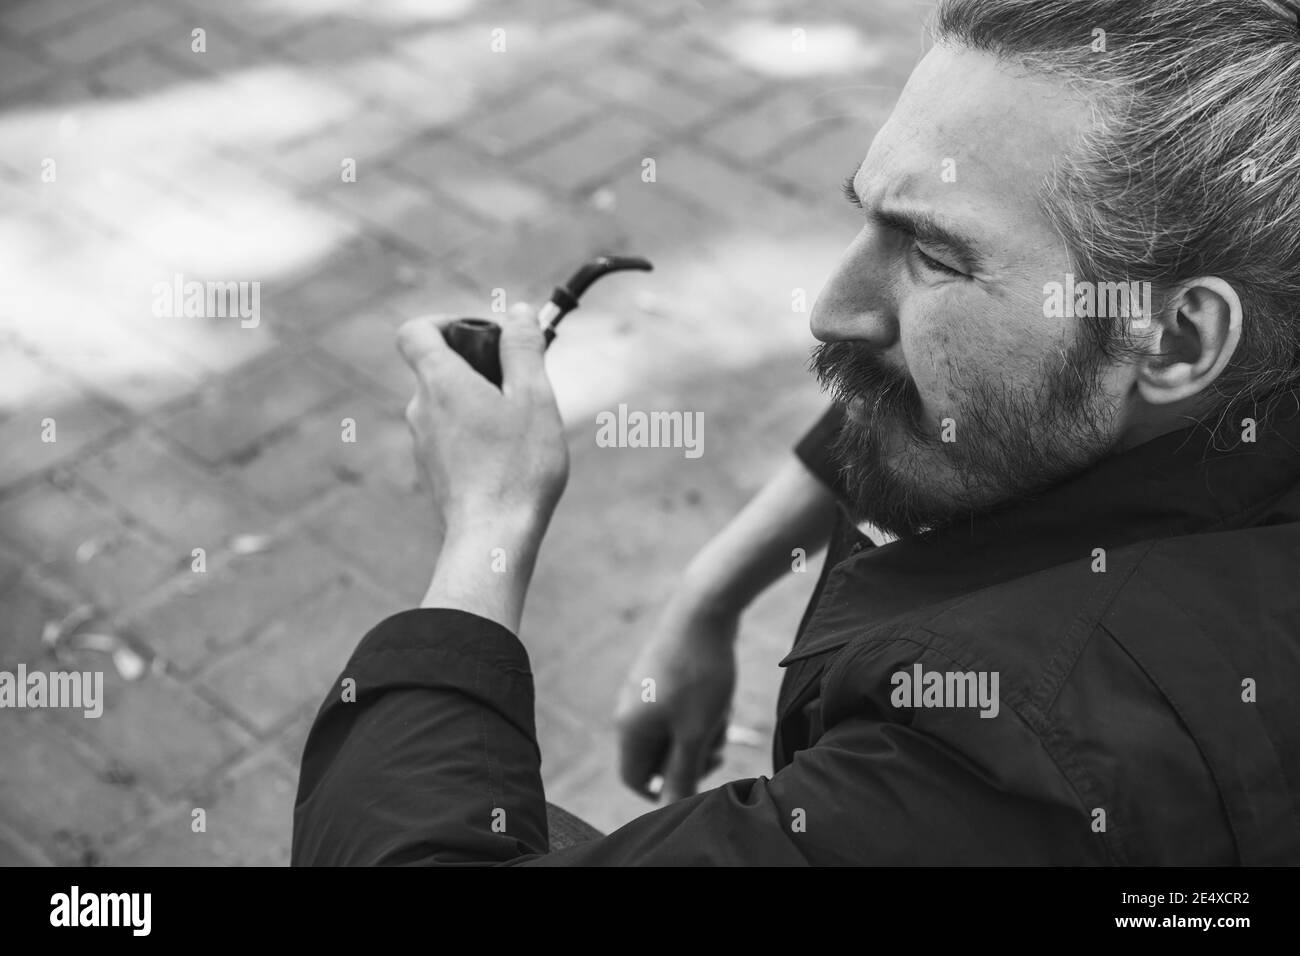 Bärtiger Mann mit Rauchpfeife, schwarz-weißes Profilportrait mit selektivem Fokus Stockfoto